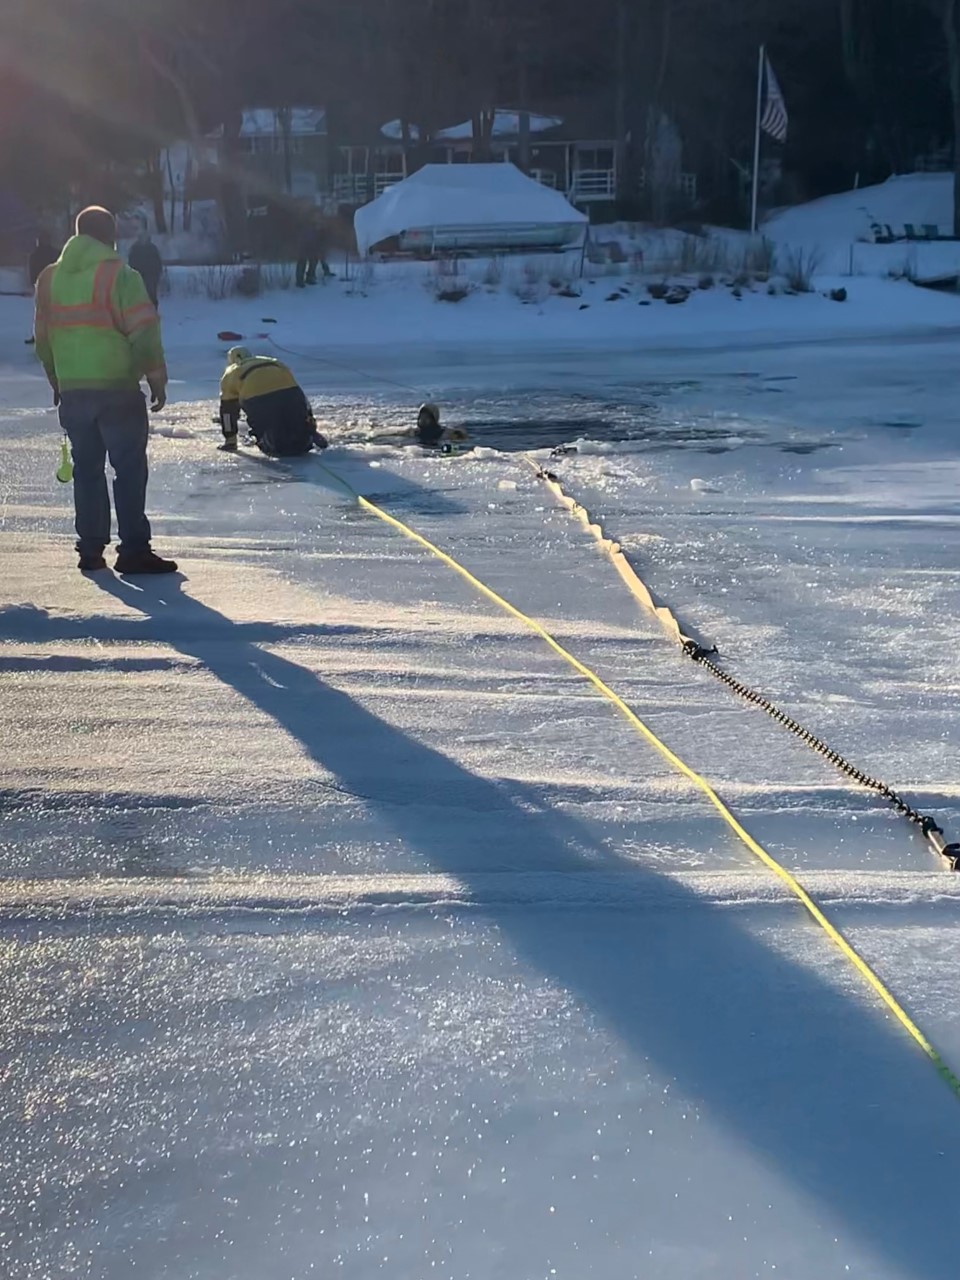 ATV falls through ice